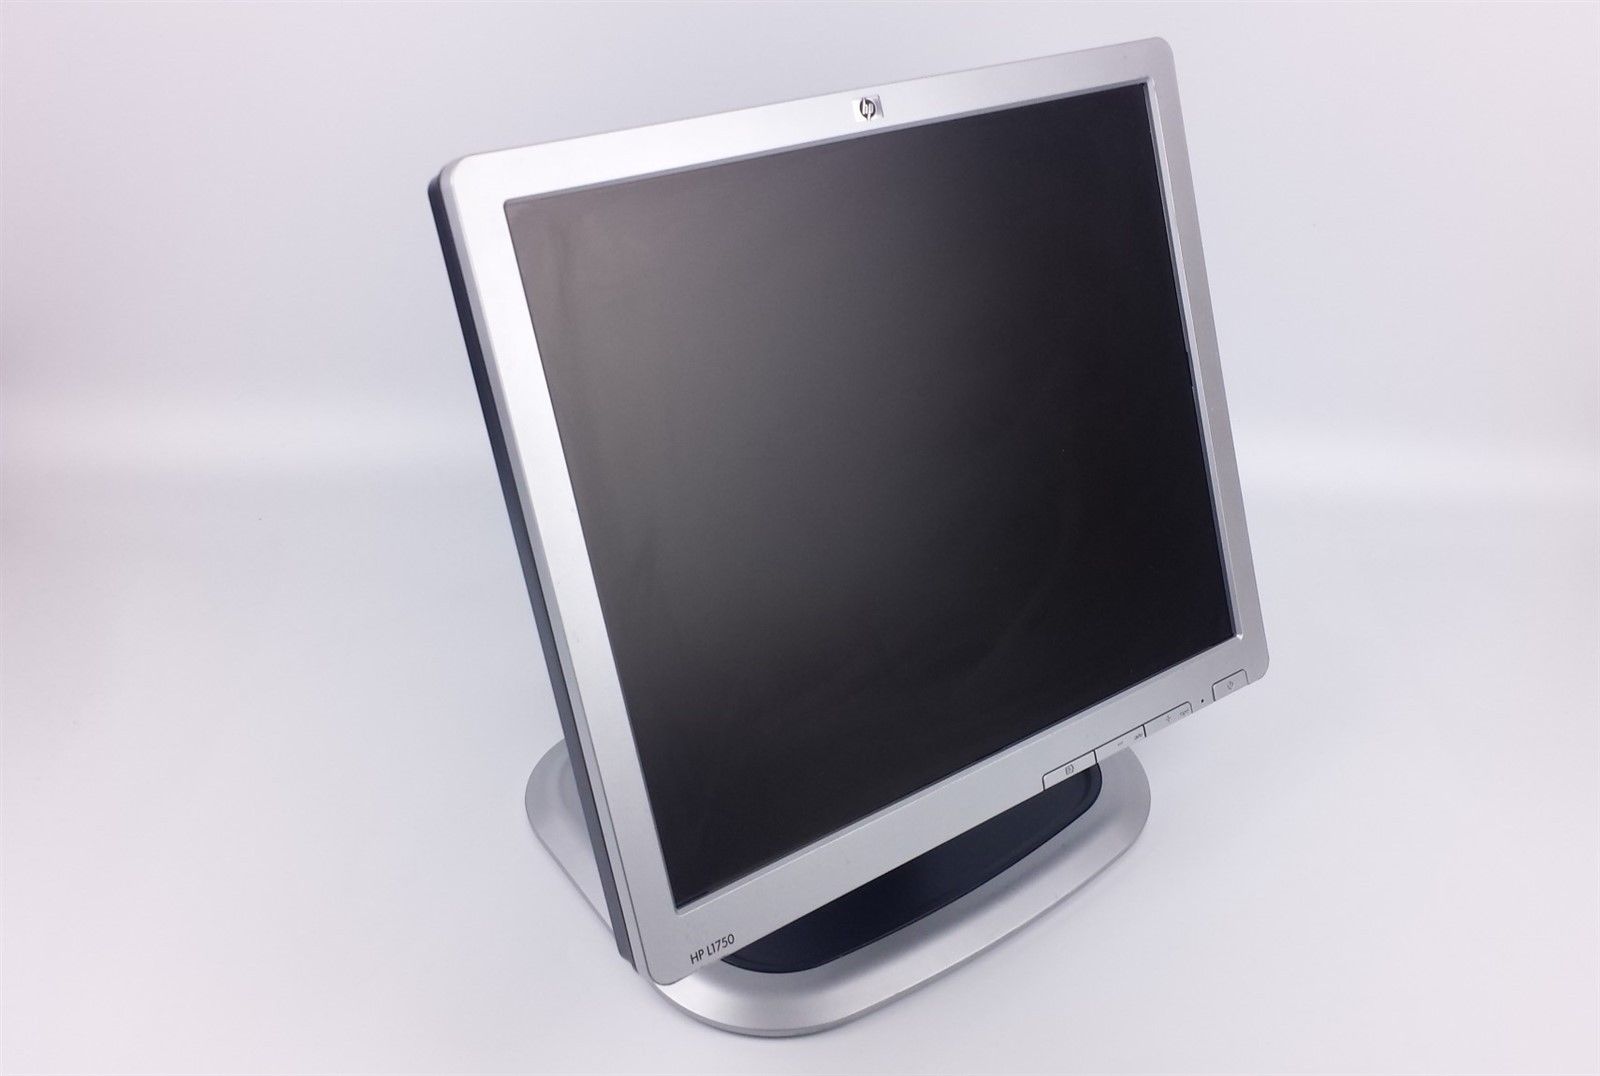 HP L1750 Flat Screen LCD Computer Monitor 17" GF904A w/ Power & VGA Cord